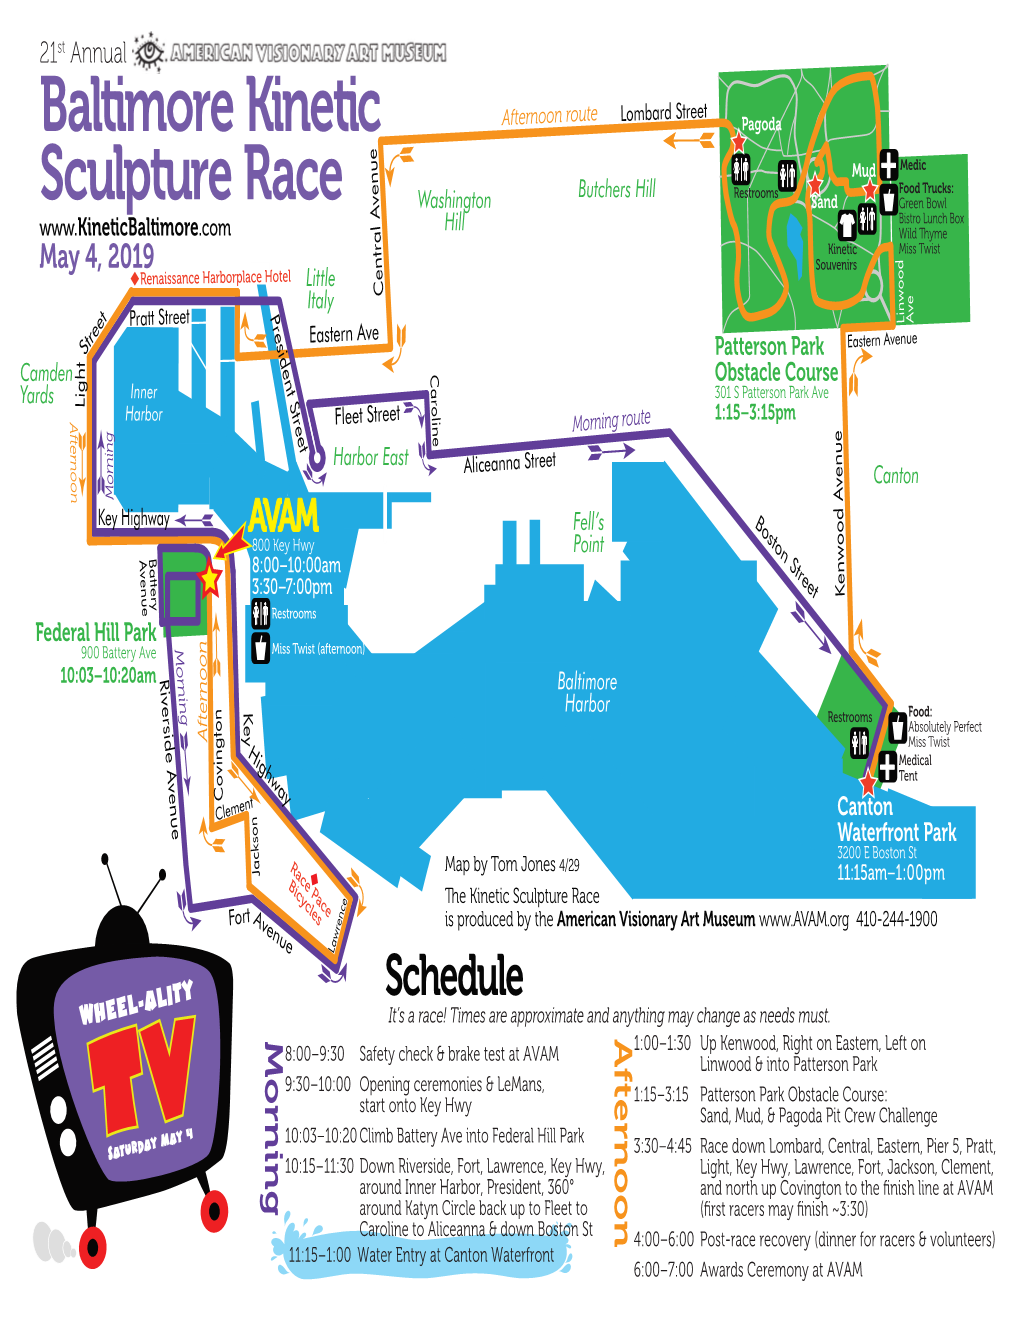 2019 Baltimore Kinetic Sculpture Race Spectators' Guide